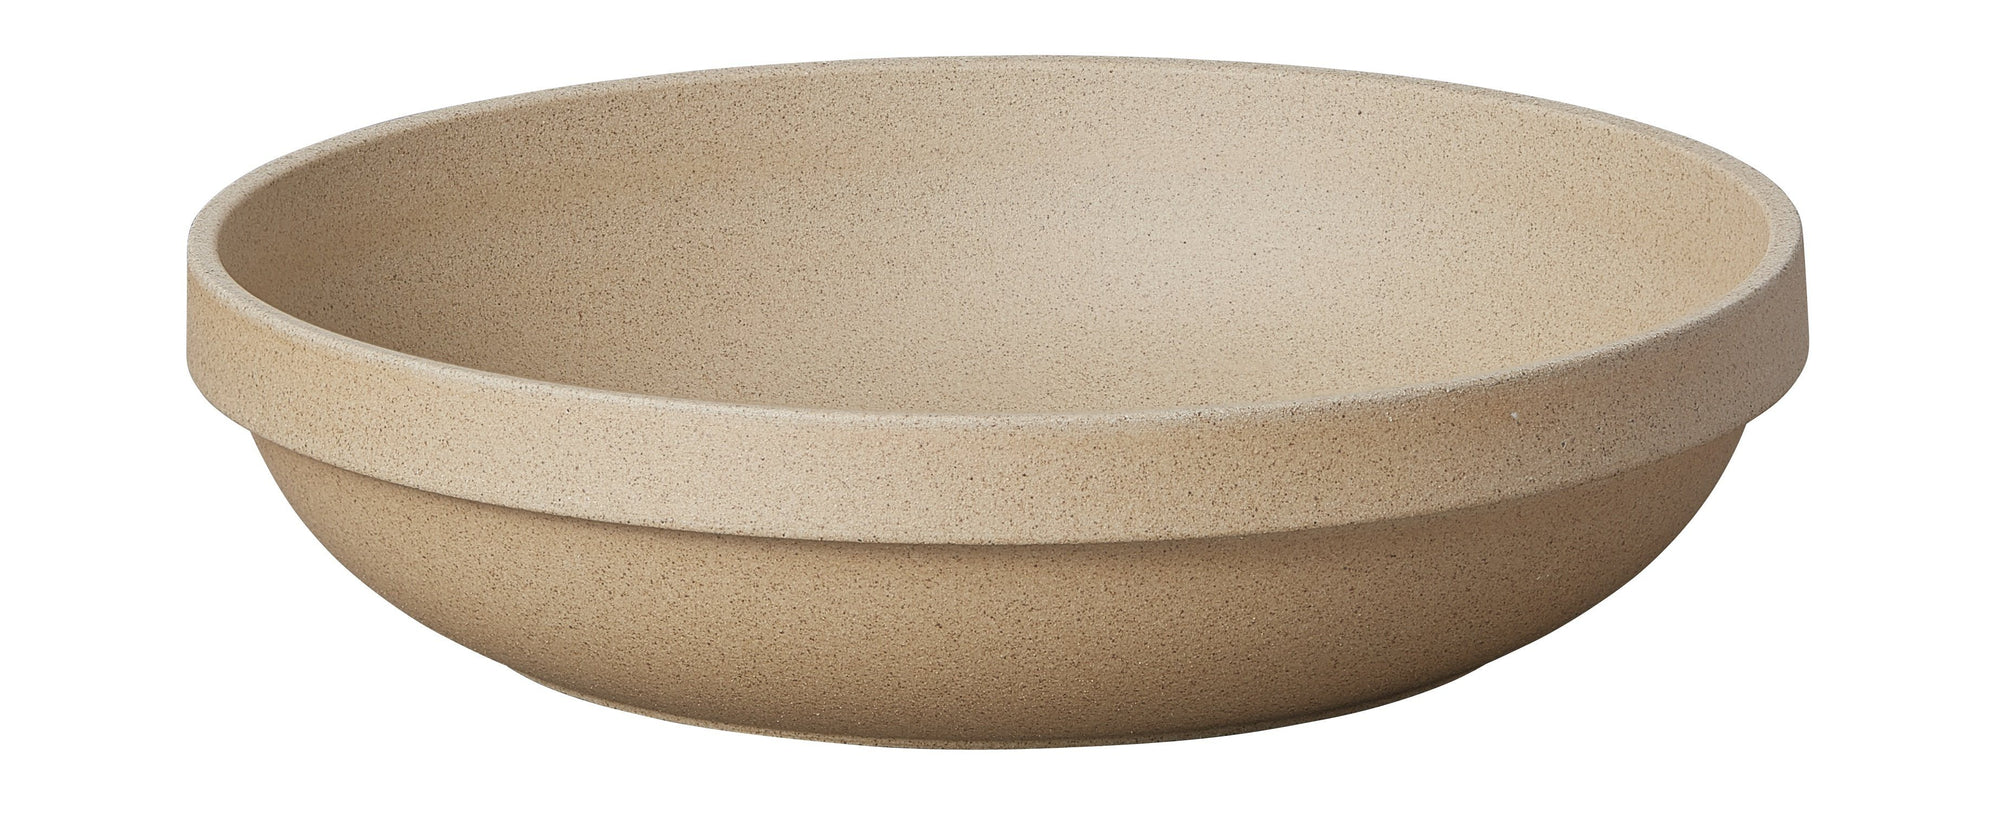 Hasami Porcelain, Round Bowl, Large - Natural, Natural- Placewares